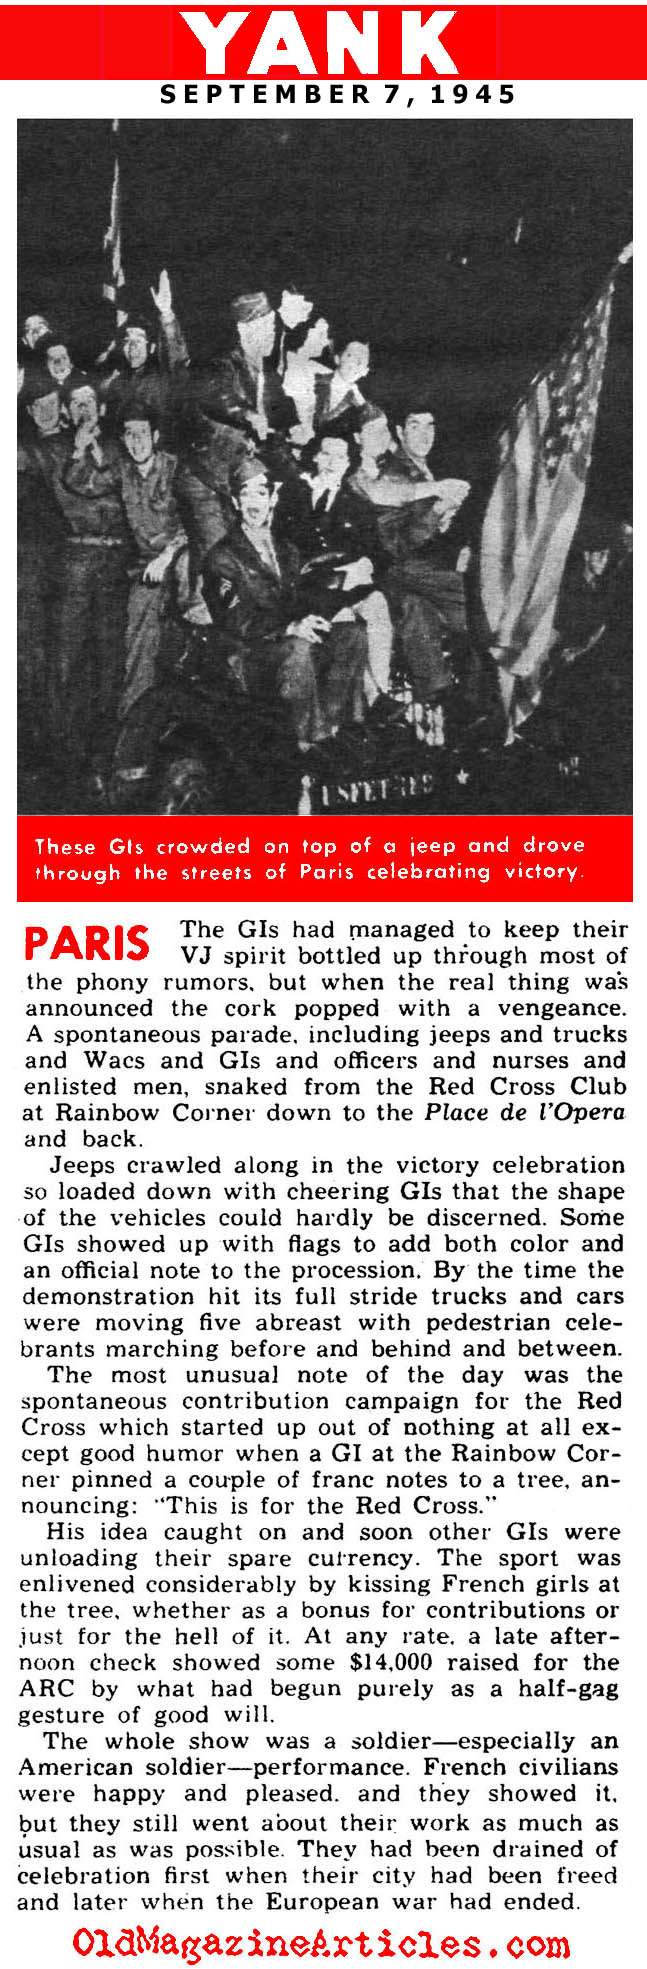 VJ Day in Paris (Yank Magazine, 1945)